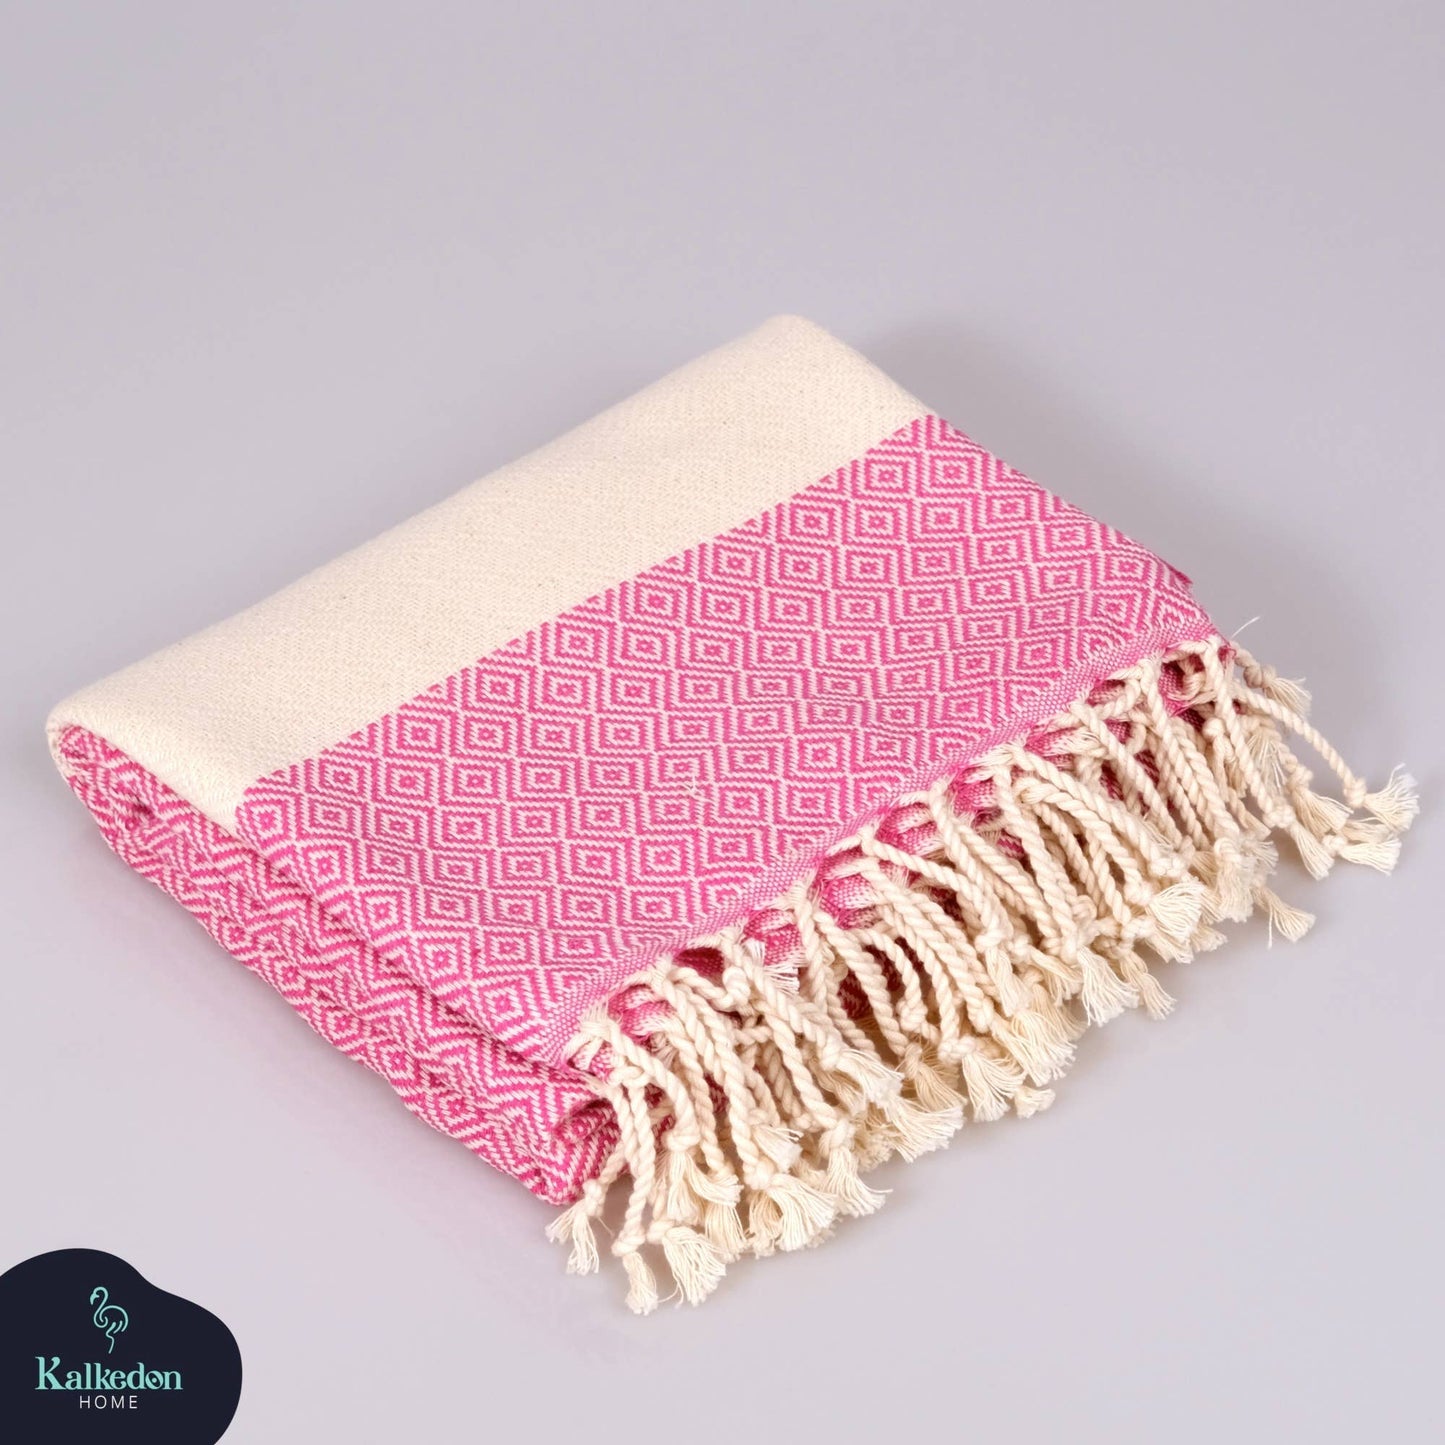 Turkish Towel | Peshtemal | Sand Resistant Beach Towel….Pink